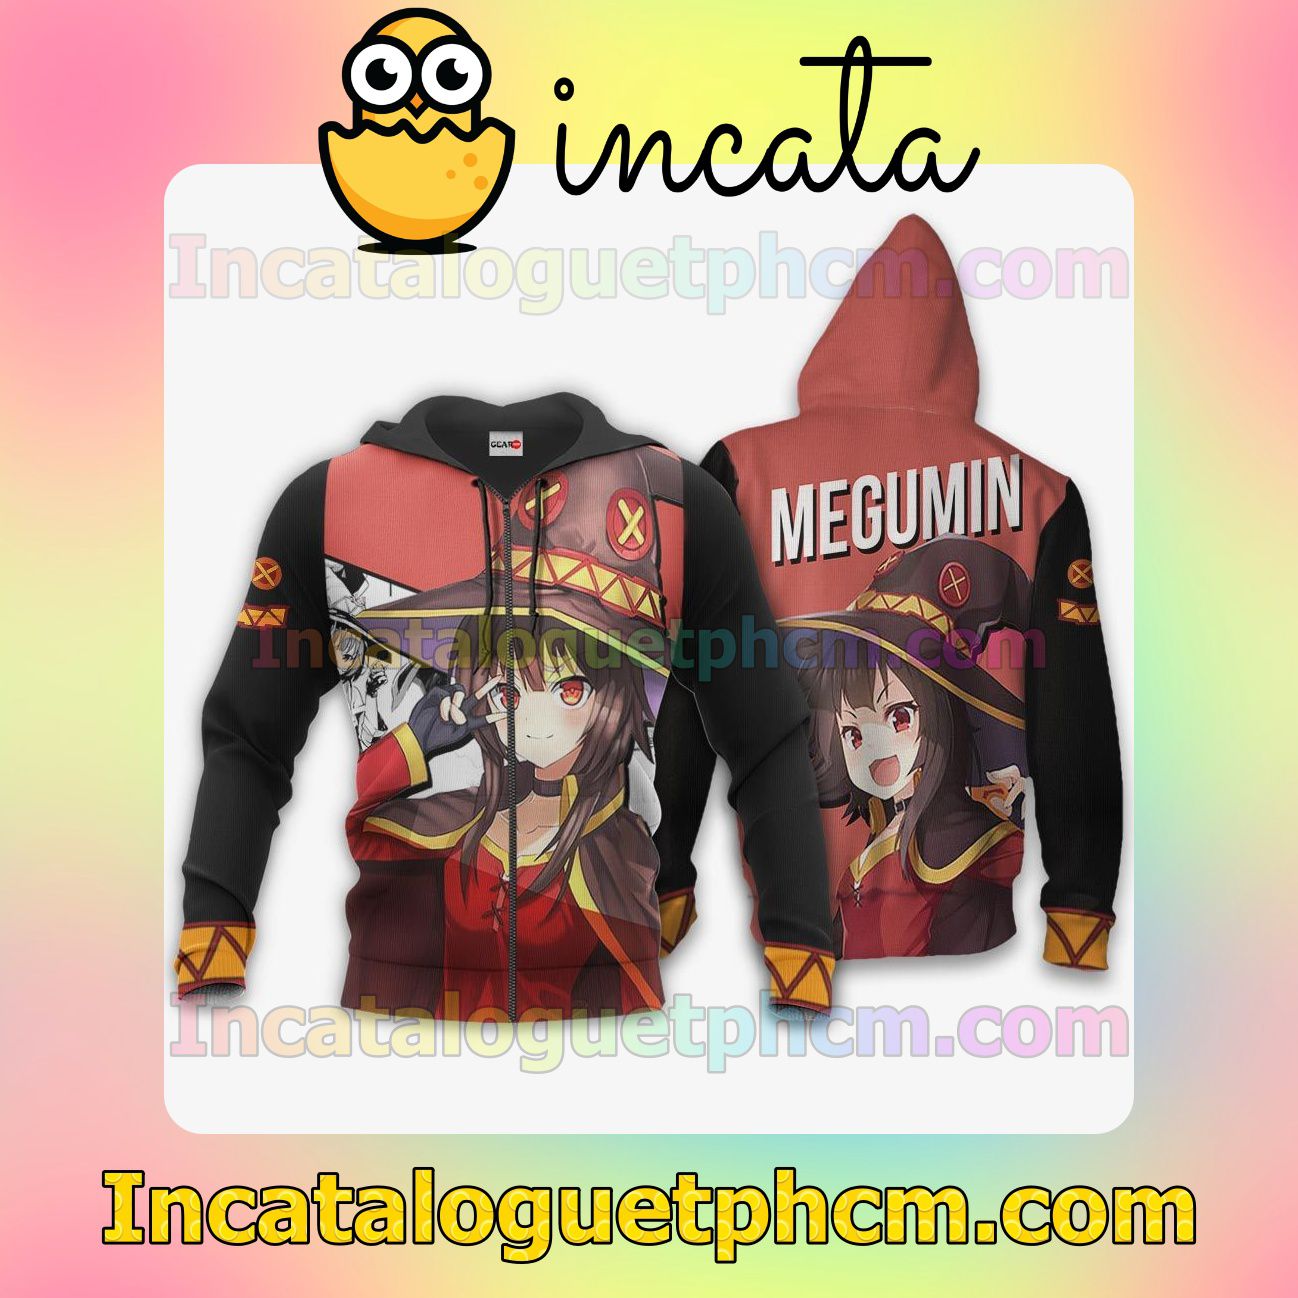 Megumin KonoSuba Anime Clothing Merch Zip Hoodie Jacket Shirts